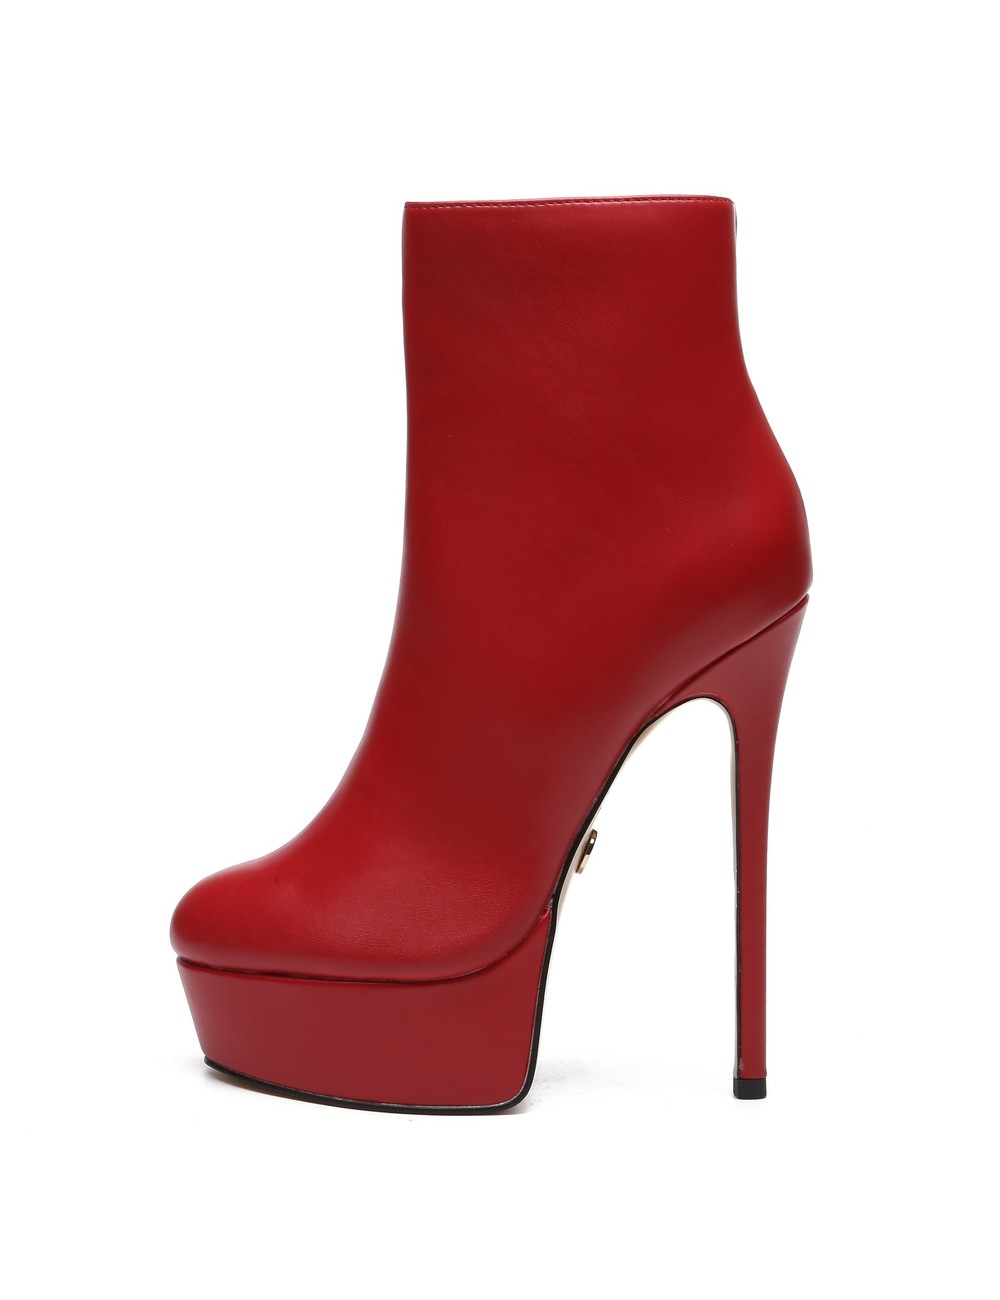 Steve Madden Carrson Dark Red | Red high heels, Heels, Fashion heels